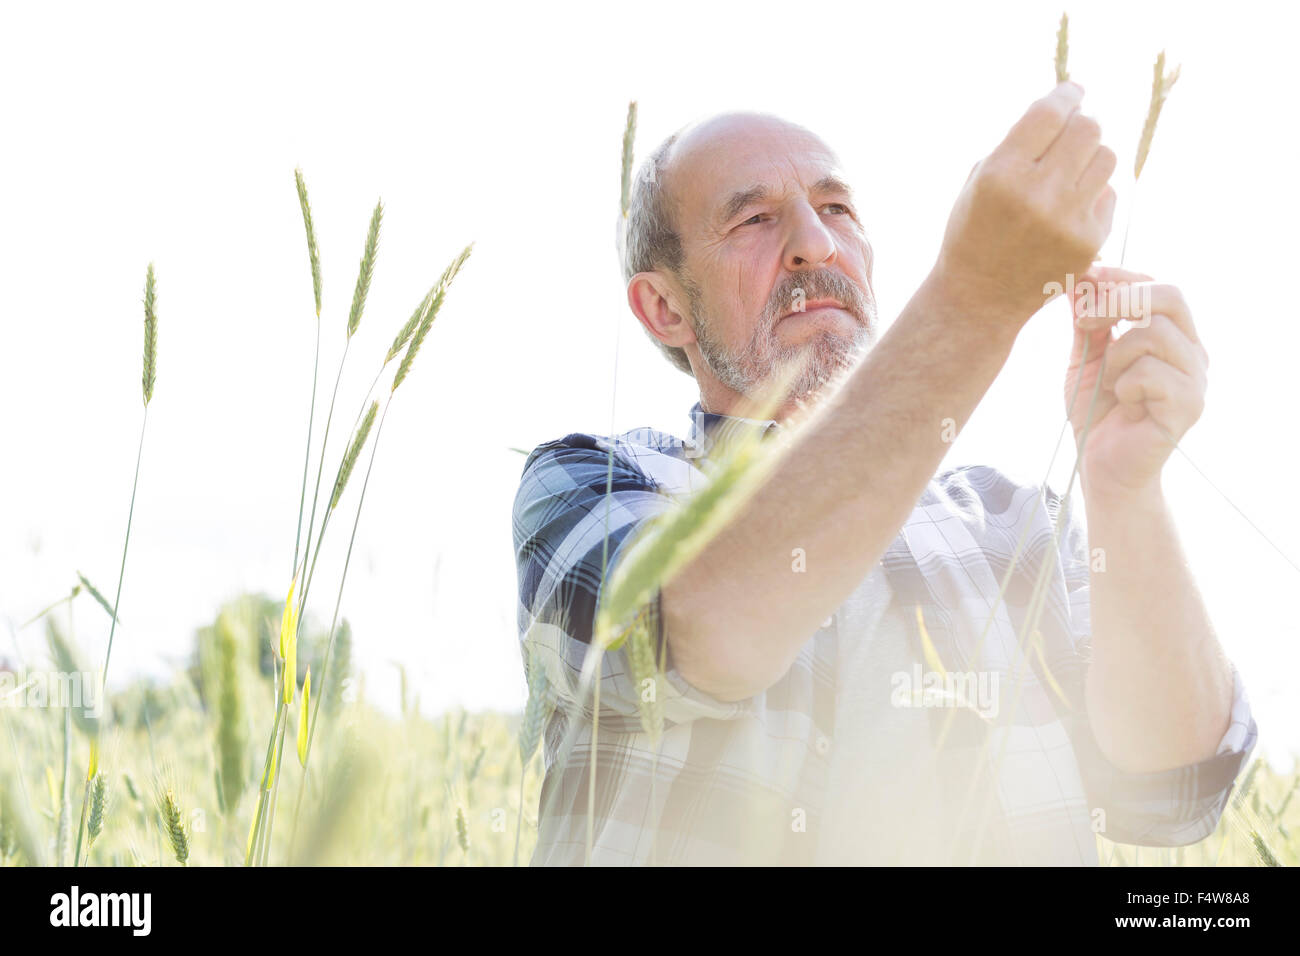 Serious farmer examining rural wheat stalk crop Stock Photo